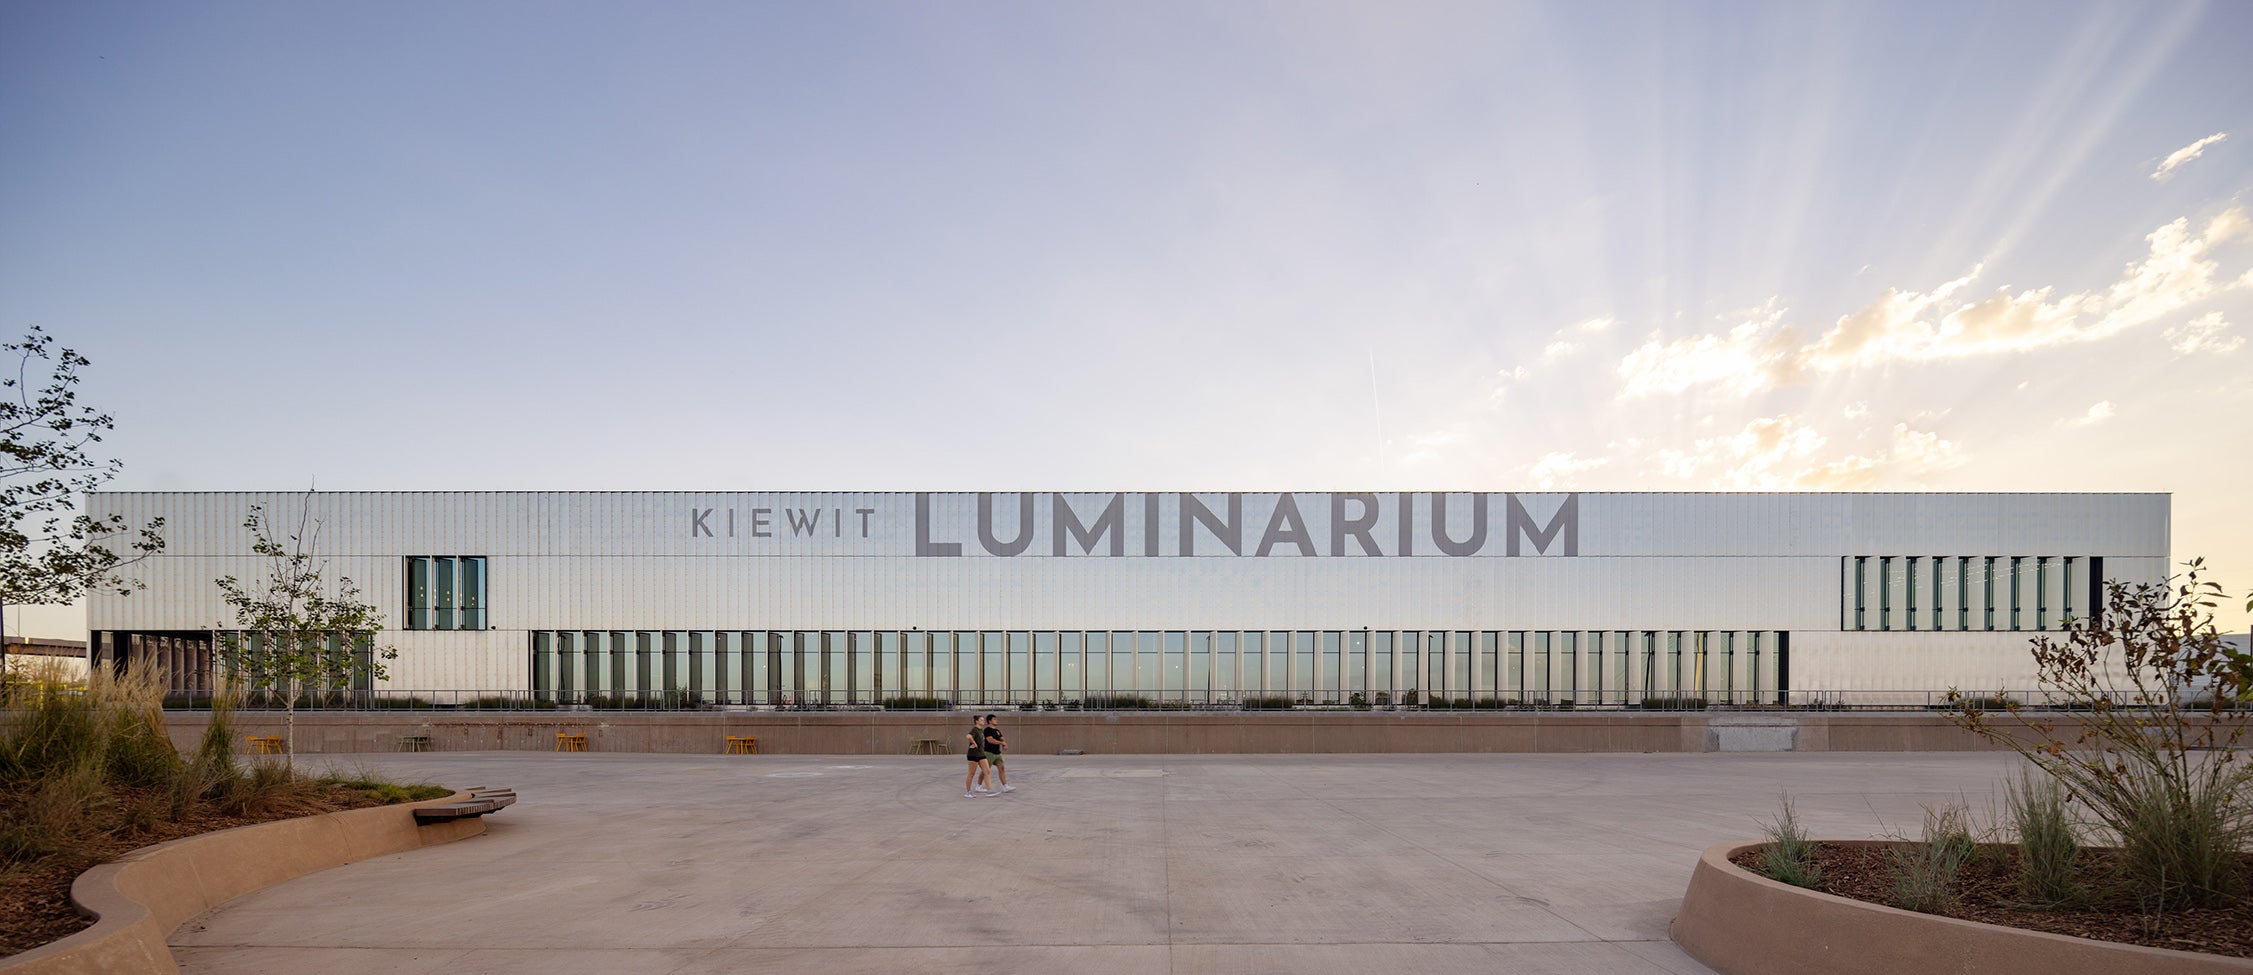 exterior view of Kiewit Luminarium east facade